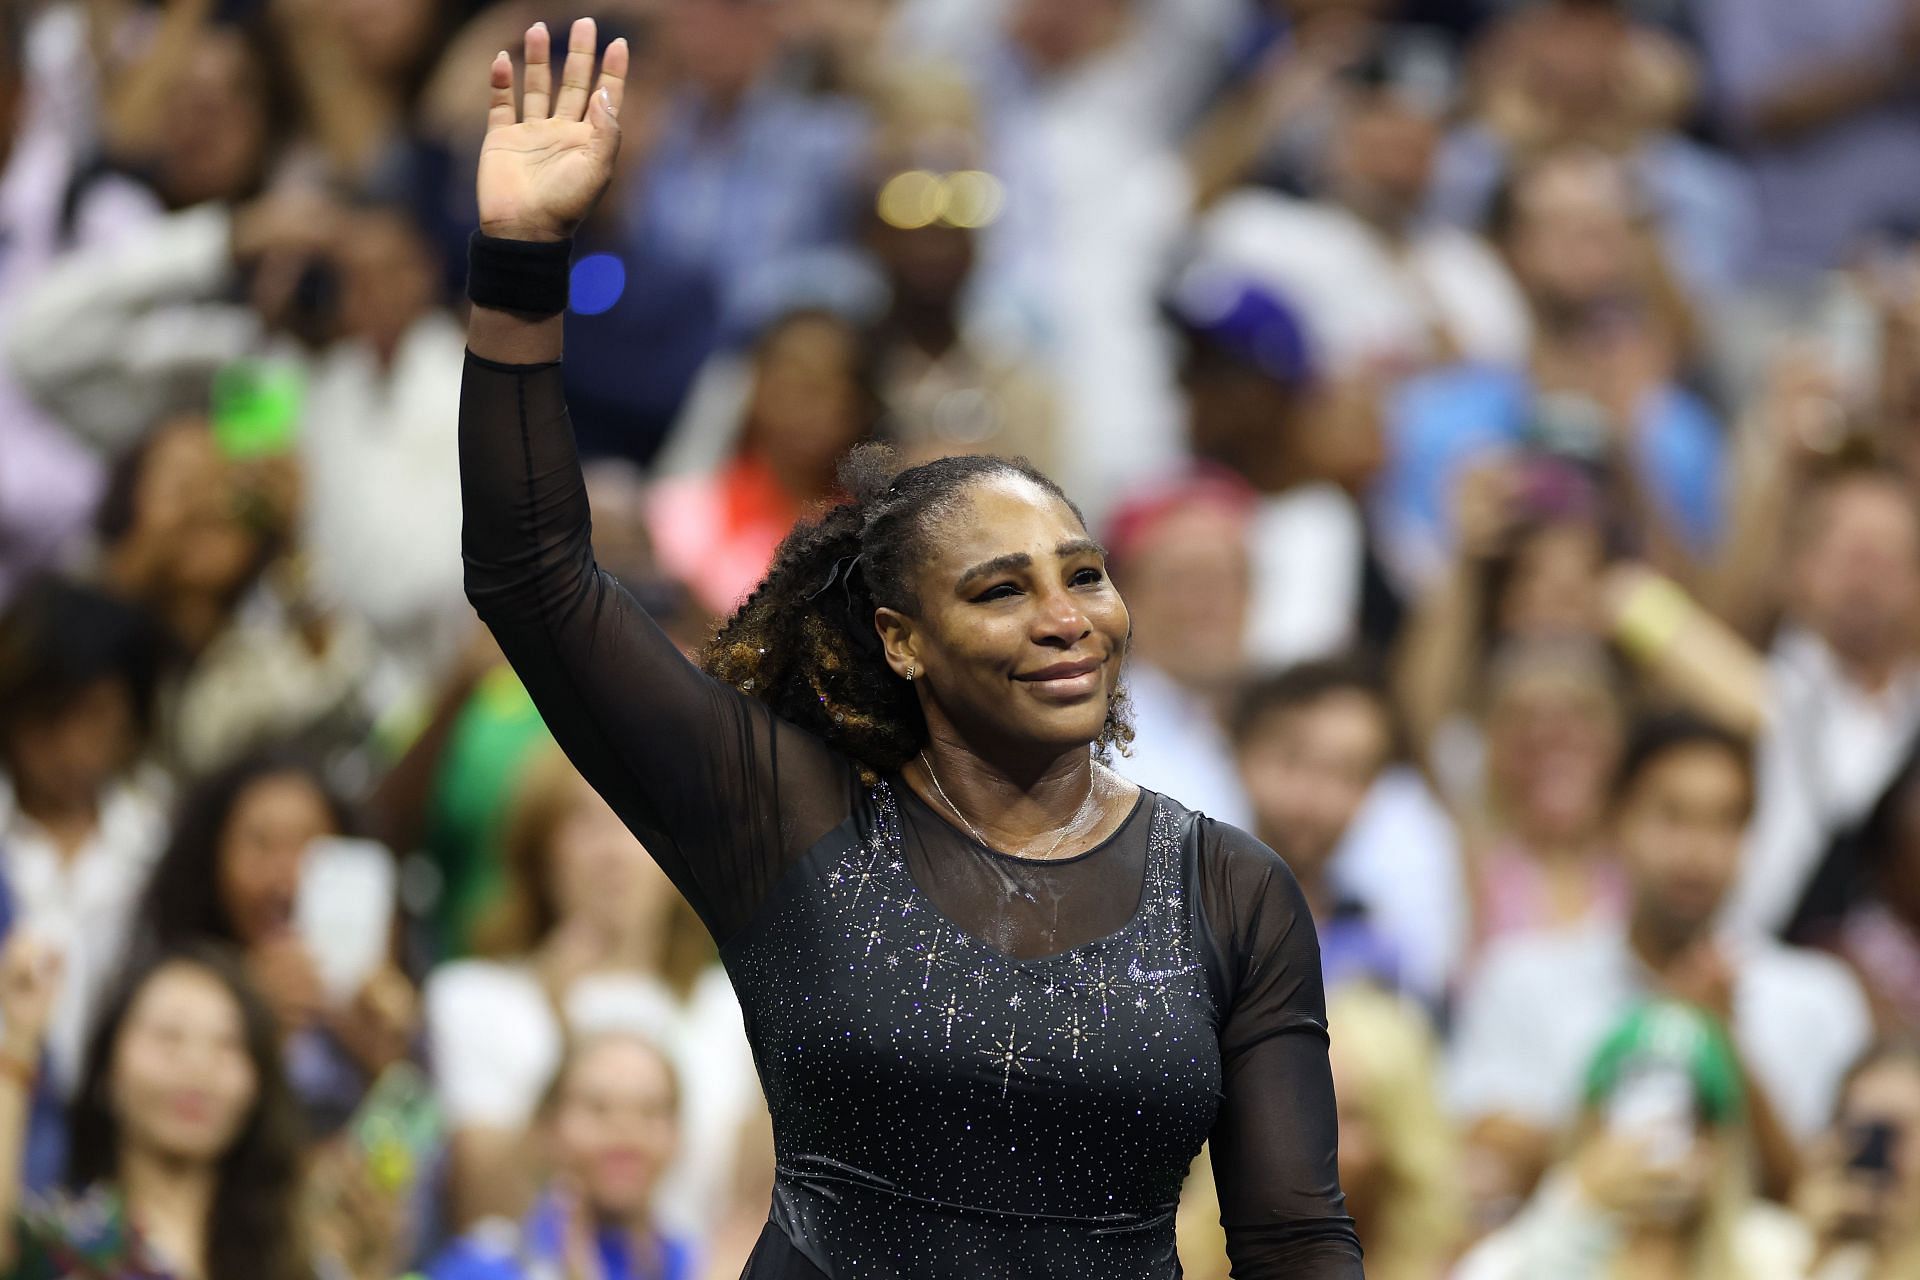 Serena Williams is a 23-time Grand Slam champion.